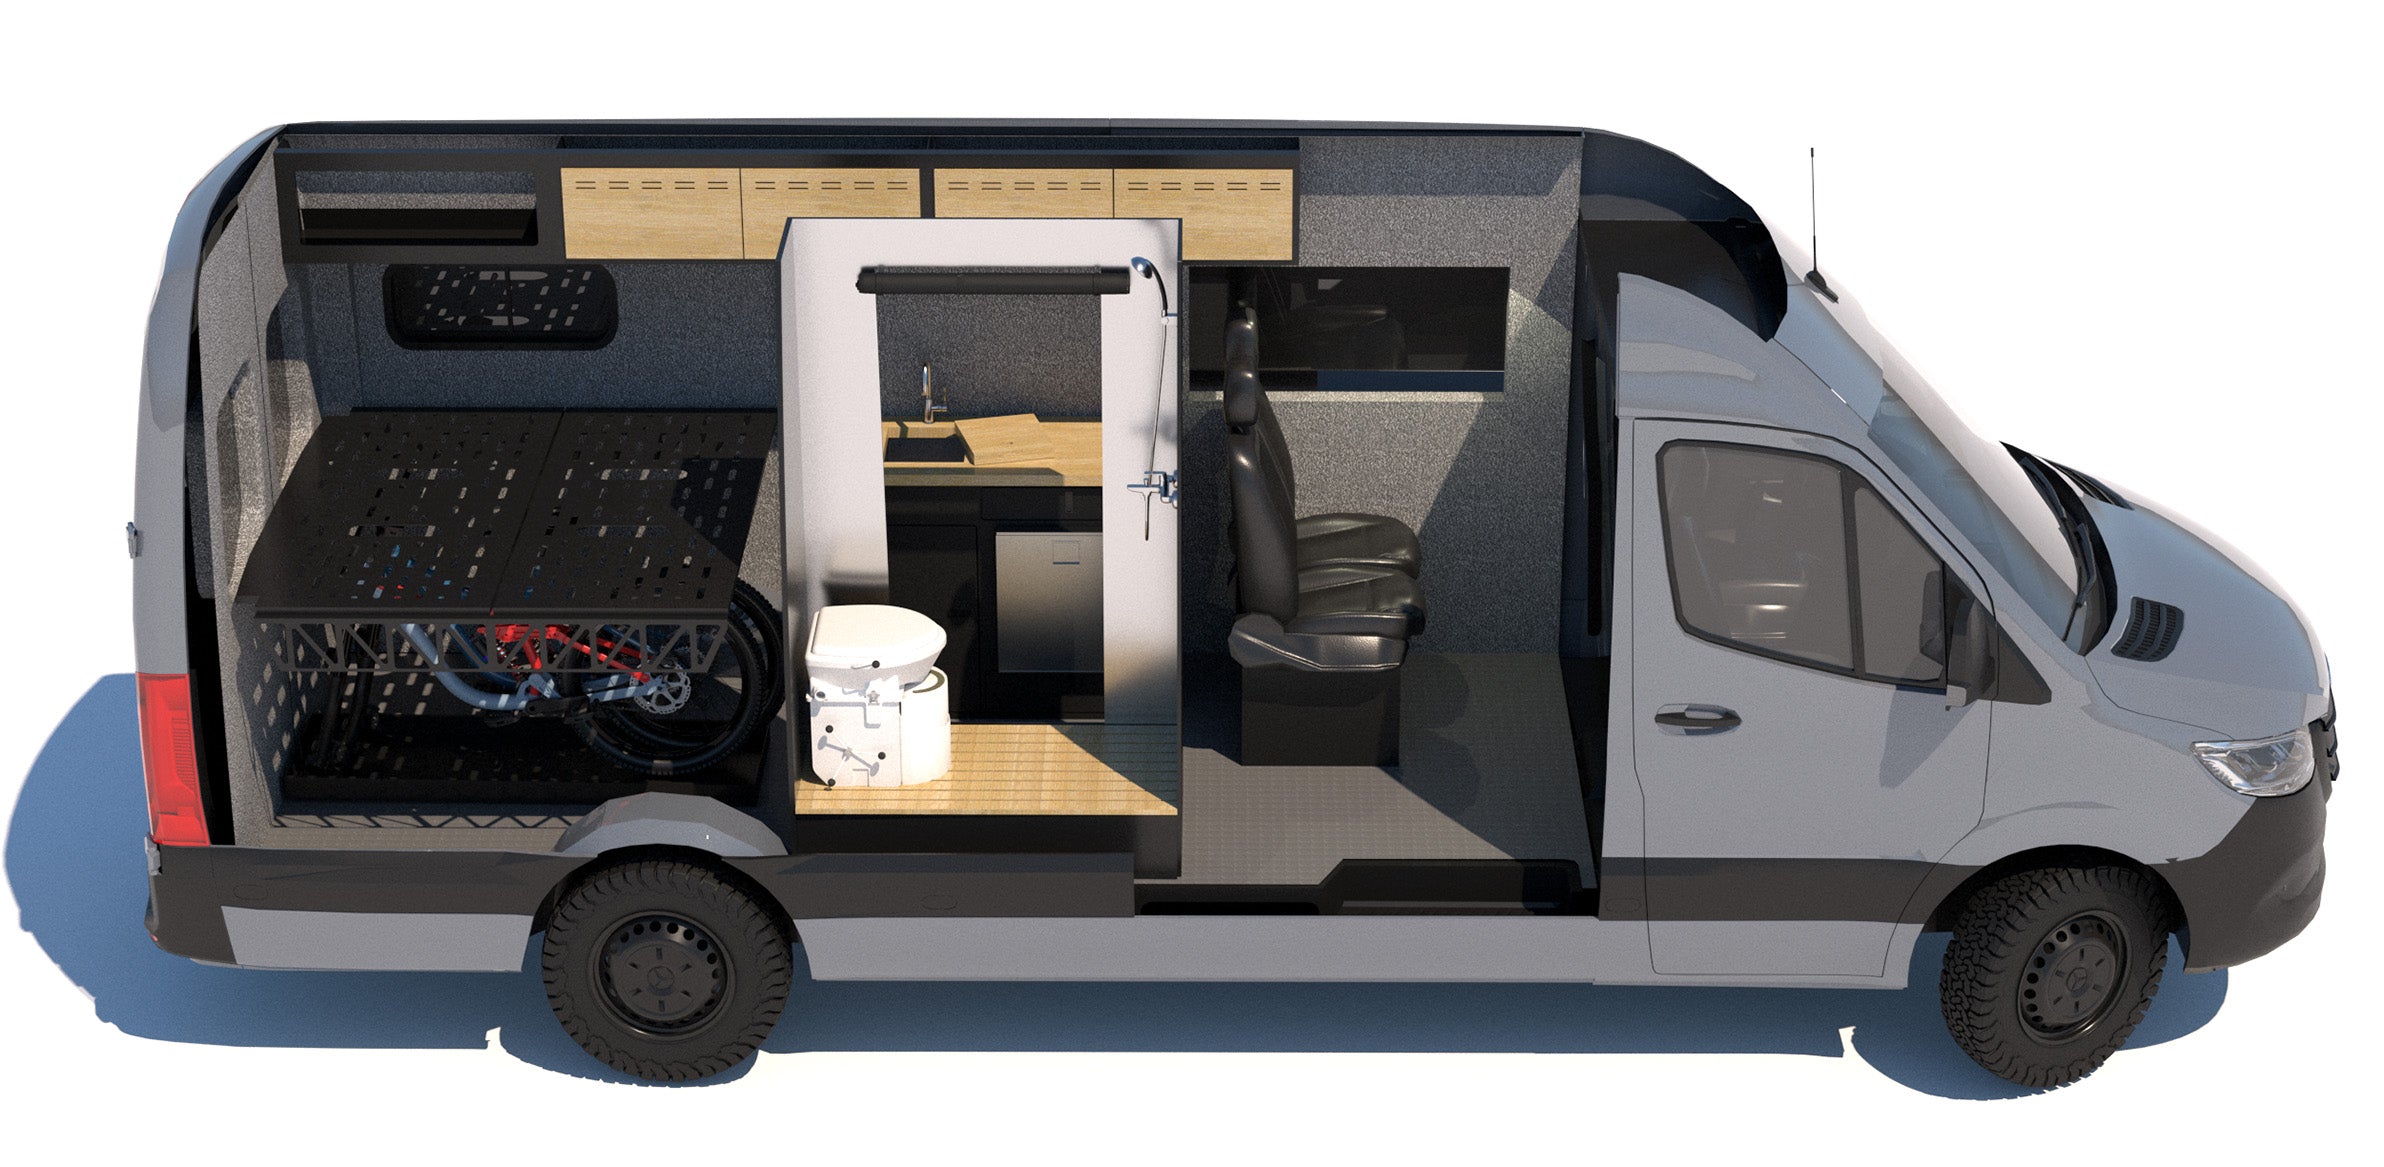 Conversion for the Sprinter Van